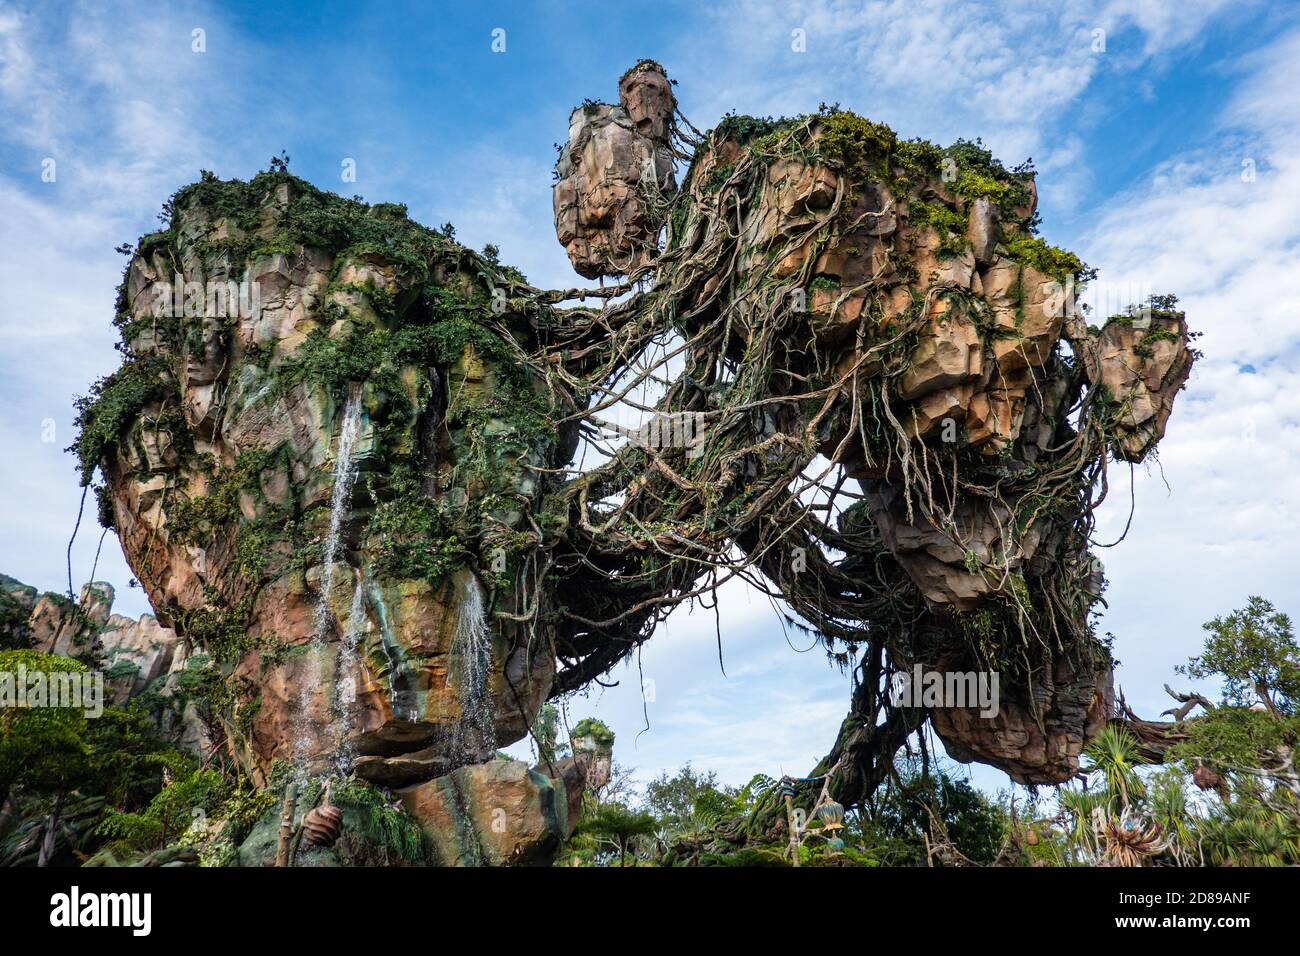 Giant rock islands defy gravity in Pandora – The World of Avatar at Animal Kingdom, Disney World, Florida Stock Photo